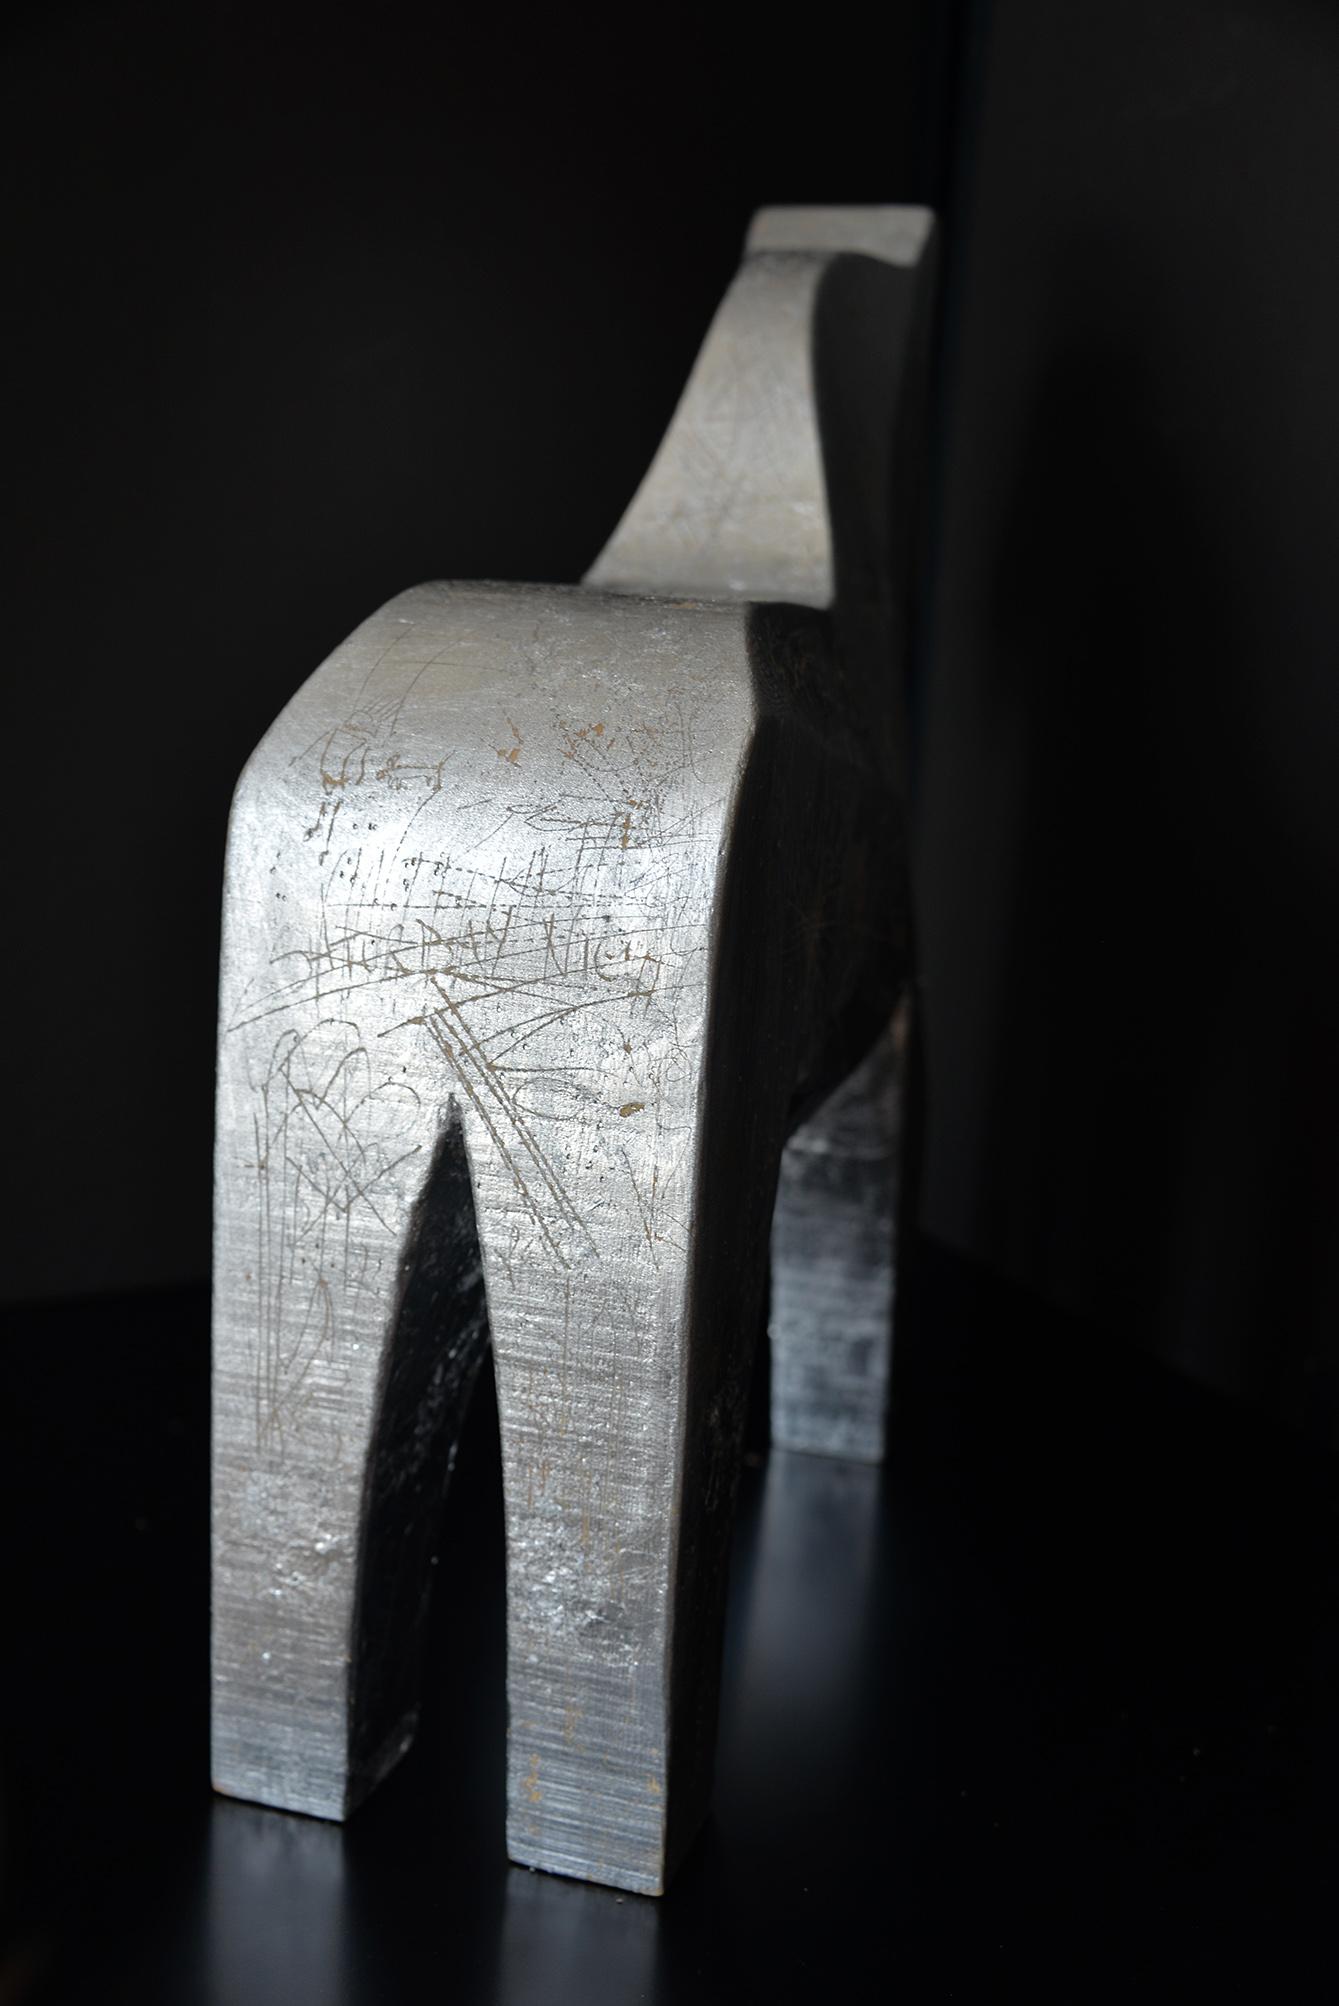 Bohême, silver leaf horse sculpture - Contemporary Sculpture by K-OD